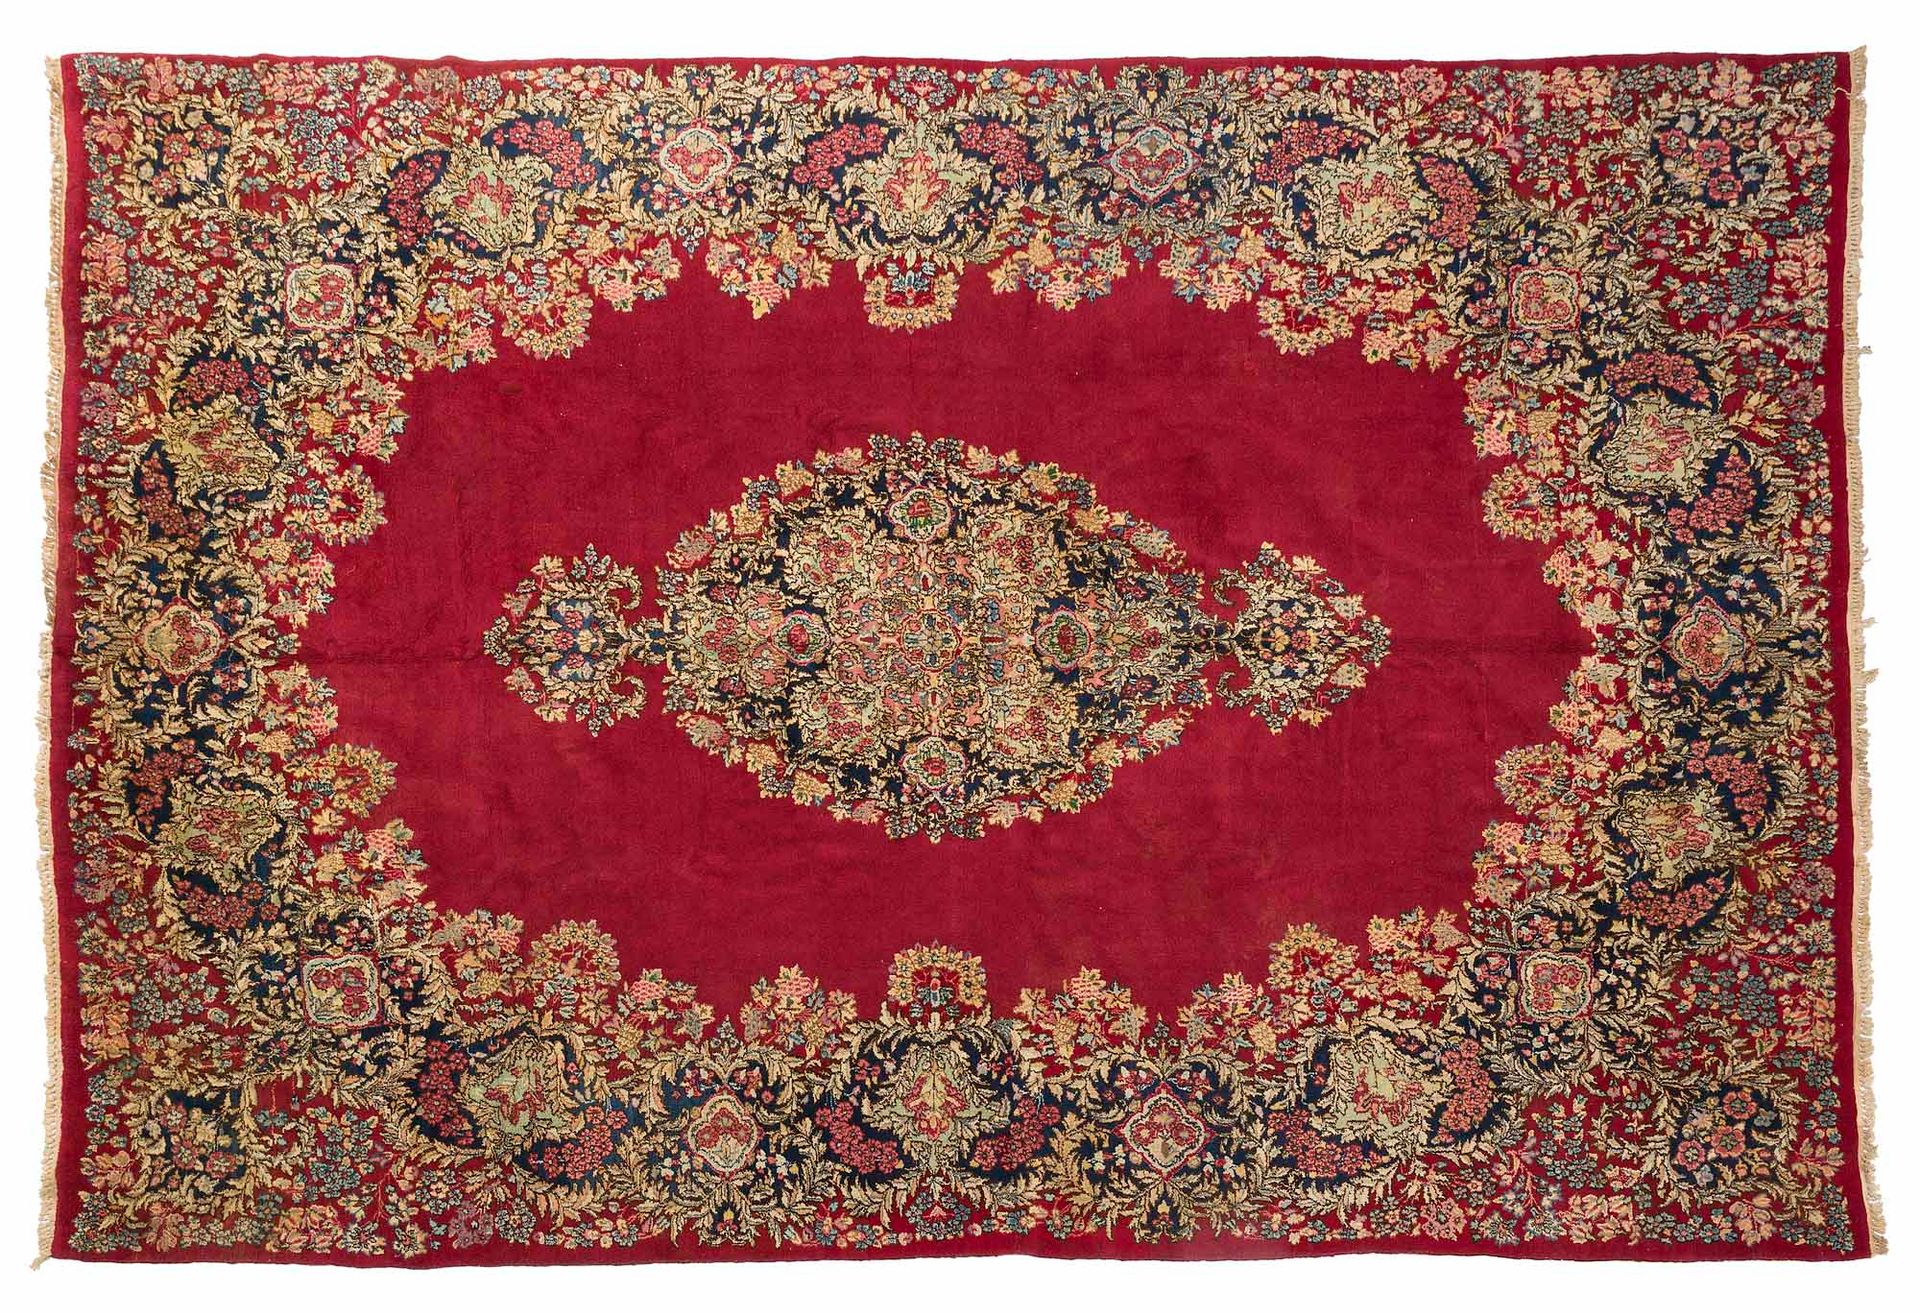 Null 基尔曼地毯（伊朗），沙赫时期，20世纪中期

尺寸：370 x 276厘米。

技术特点 : 羊毛天鹅绒，棉质底板。

一个由多色组合和花束组成的花卉&hellip;